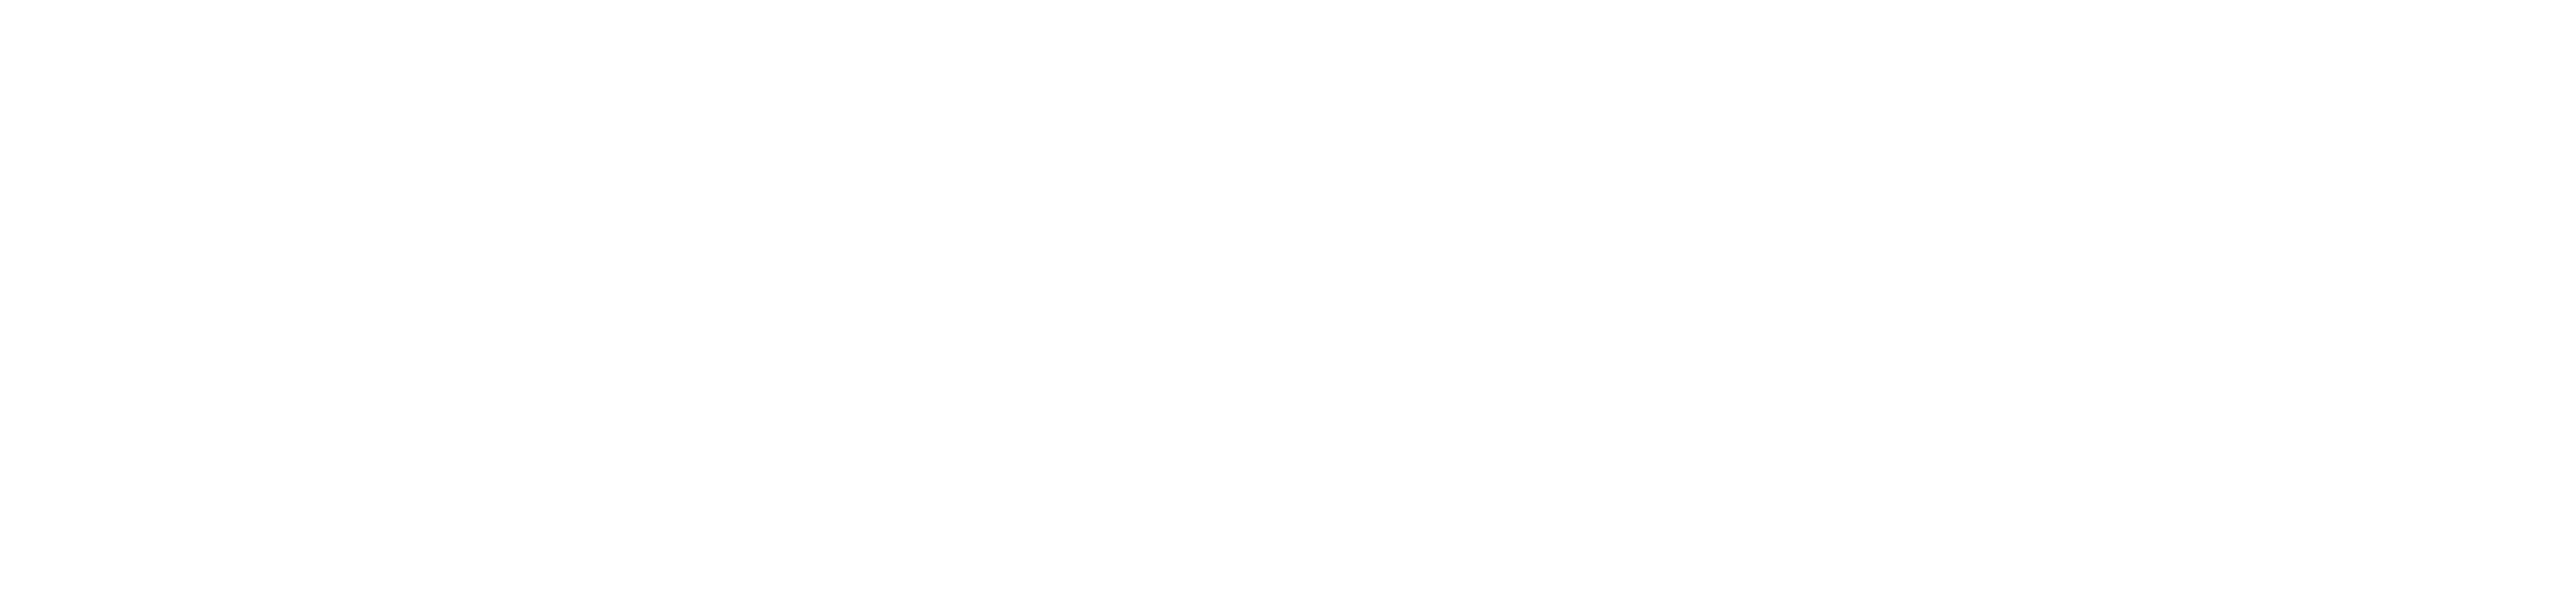 Elvira&#x27;s 40th Anniversary, Very Scary, Very Special, Special